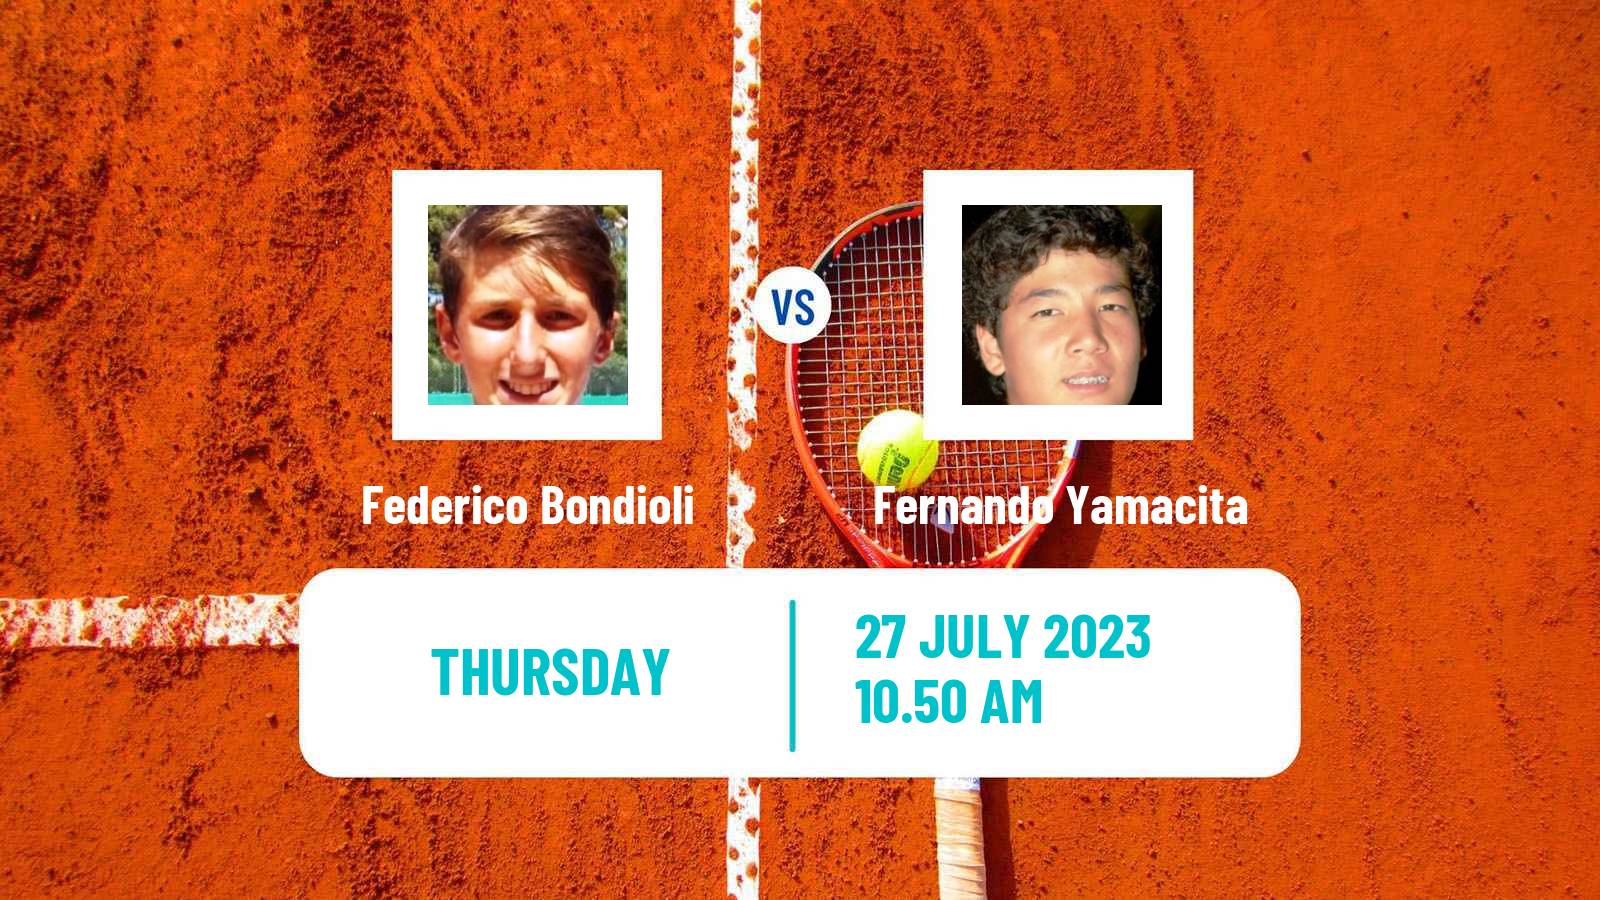 Tennis ITF M15 Perugia Men Federico Bondioli - Fernando Yamacita